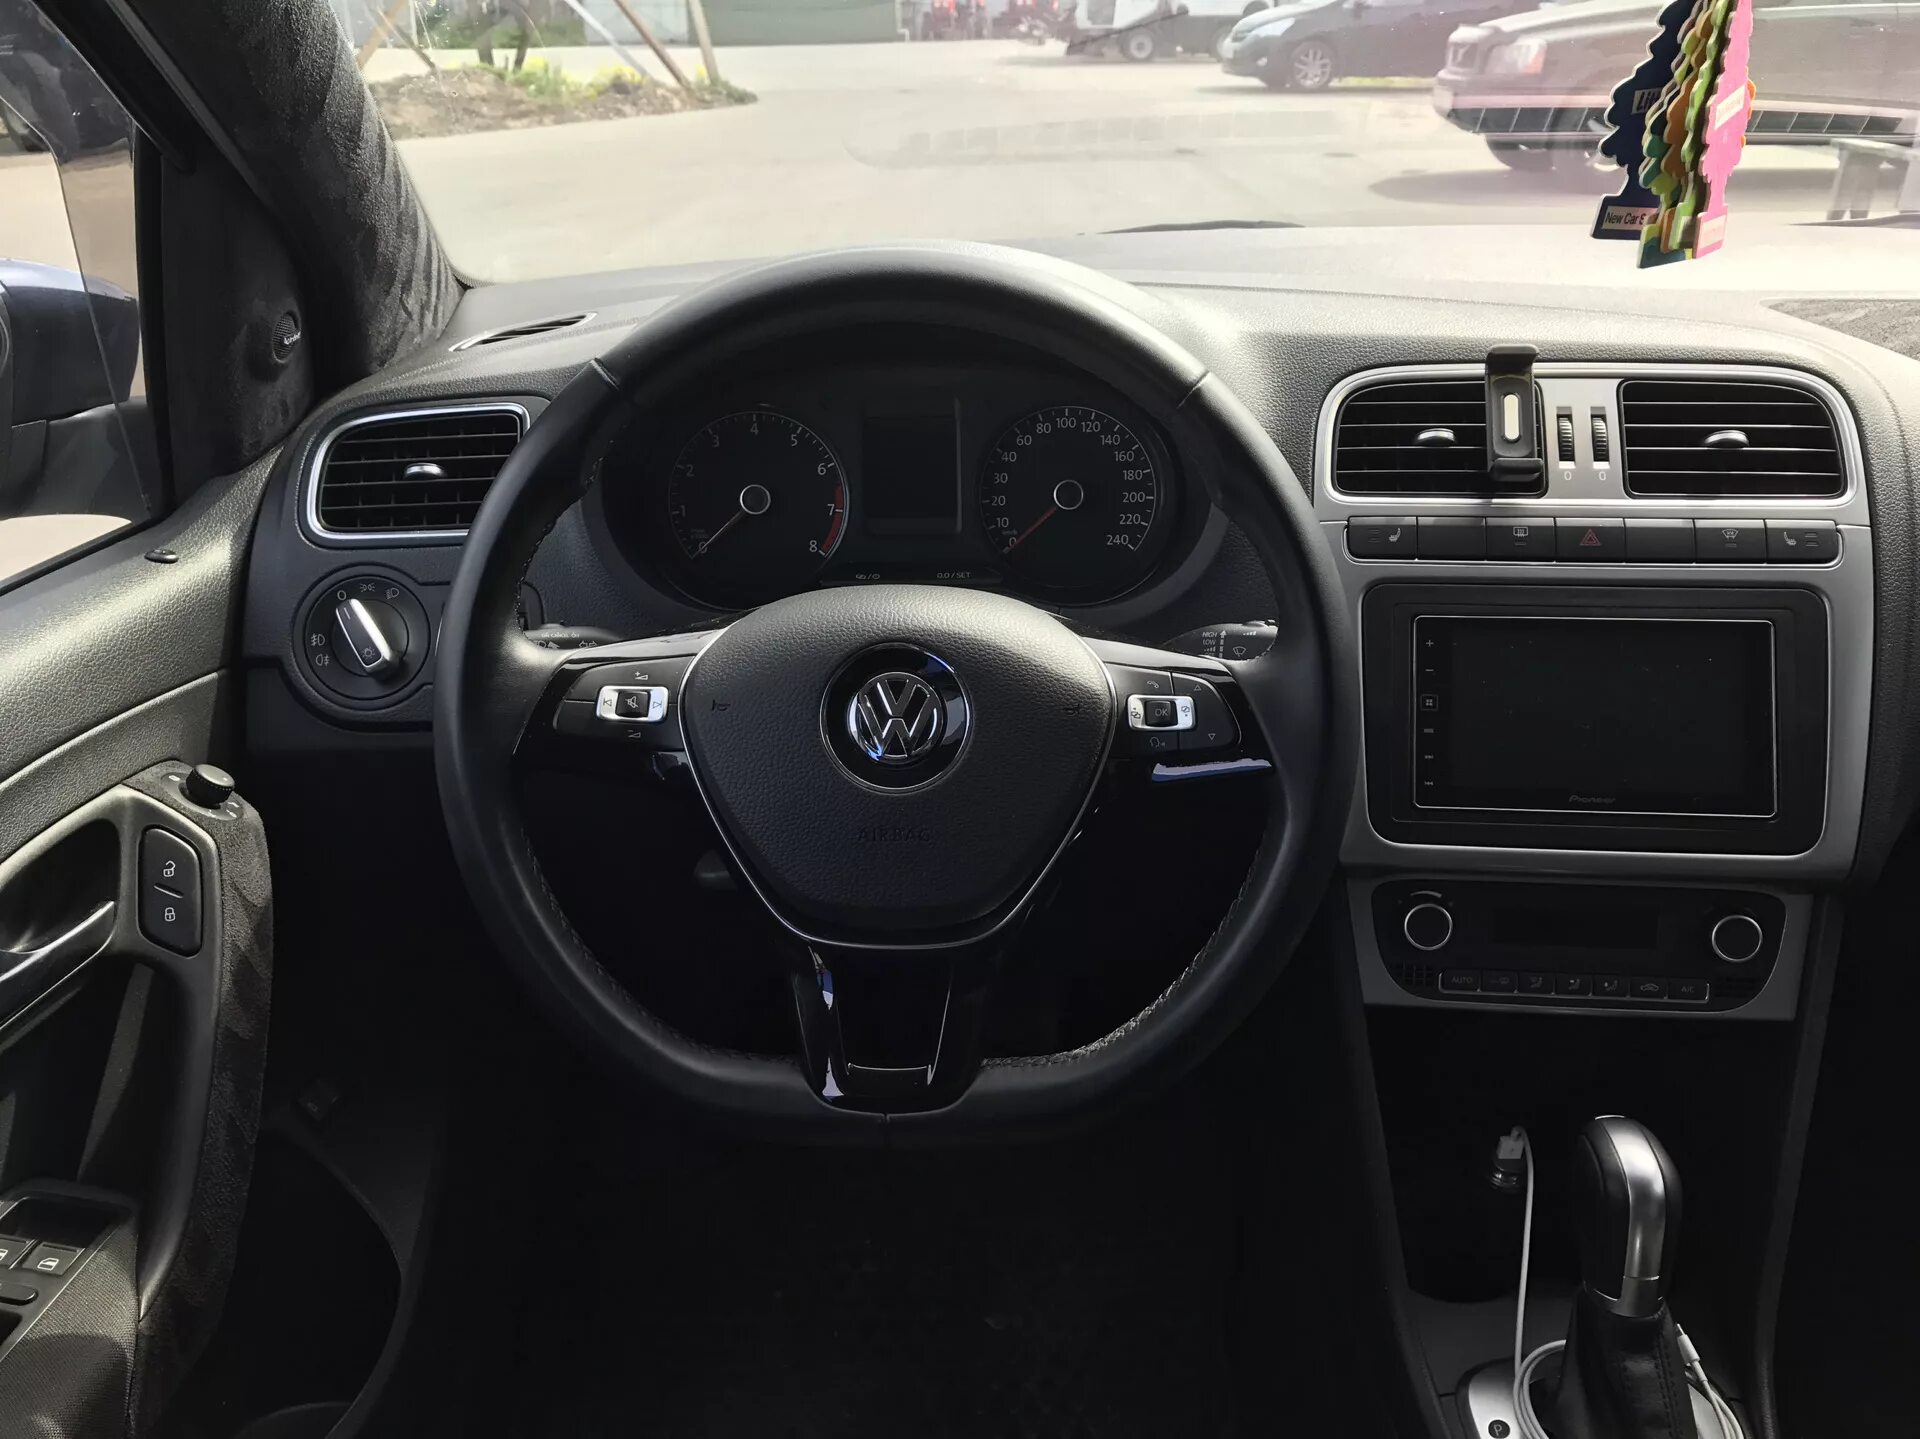 Volkswagen Polo 2014 Торпедо. Volkswagen Polo 2014 торпеда. Торпедо Фольксваген поло седан. Торпедо VW Polo sedan 2014. Поло торпедо